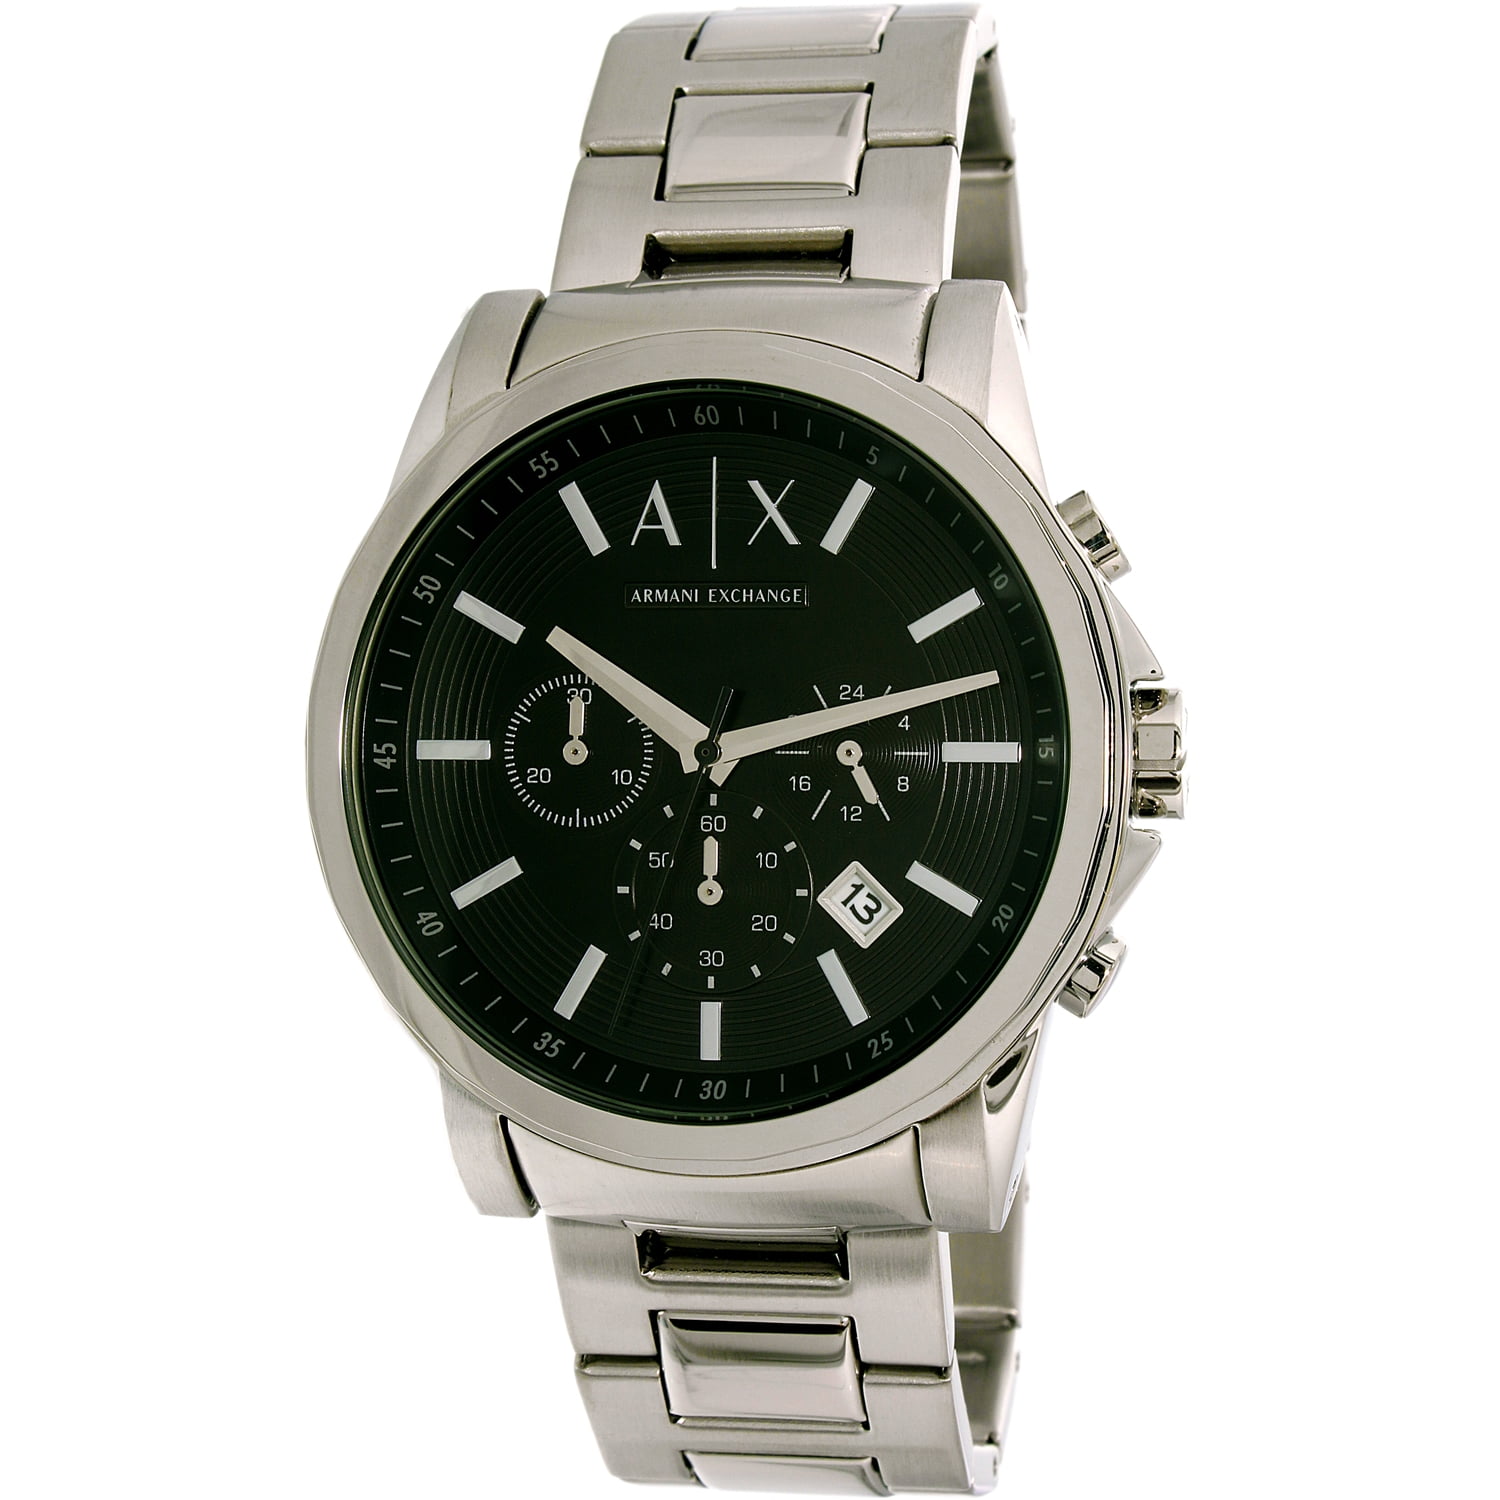 Armani Exchange - Men's AX7100 Silver Stainless-Steel Quartz Dress American Exchange Stainless Steel Watch